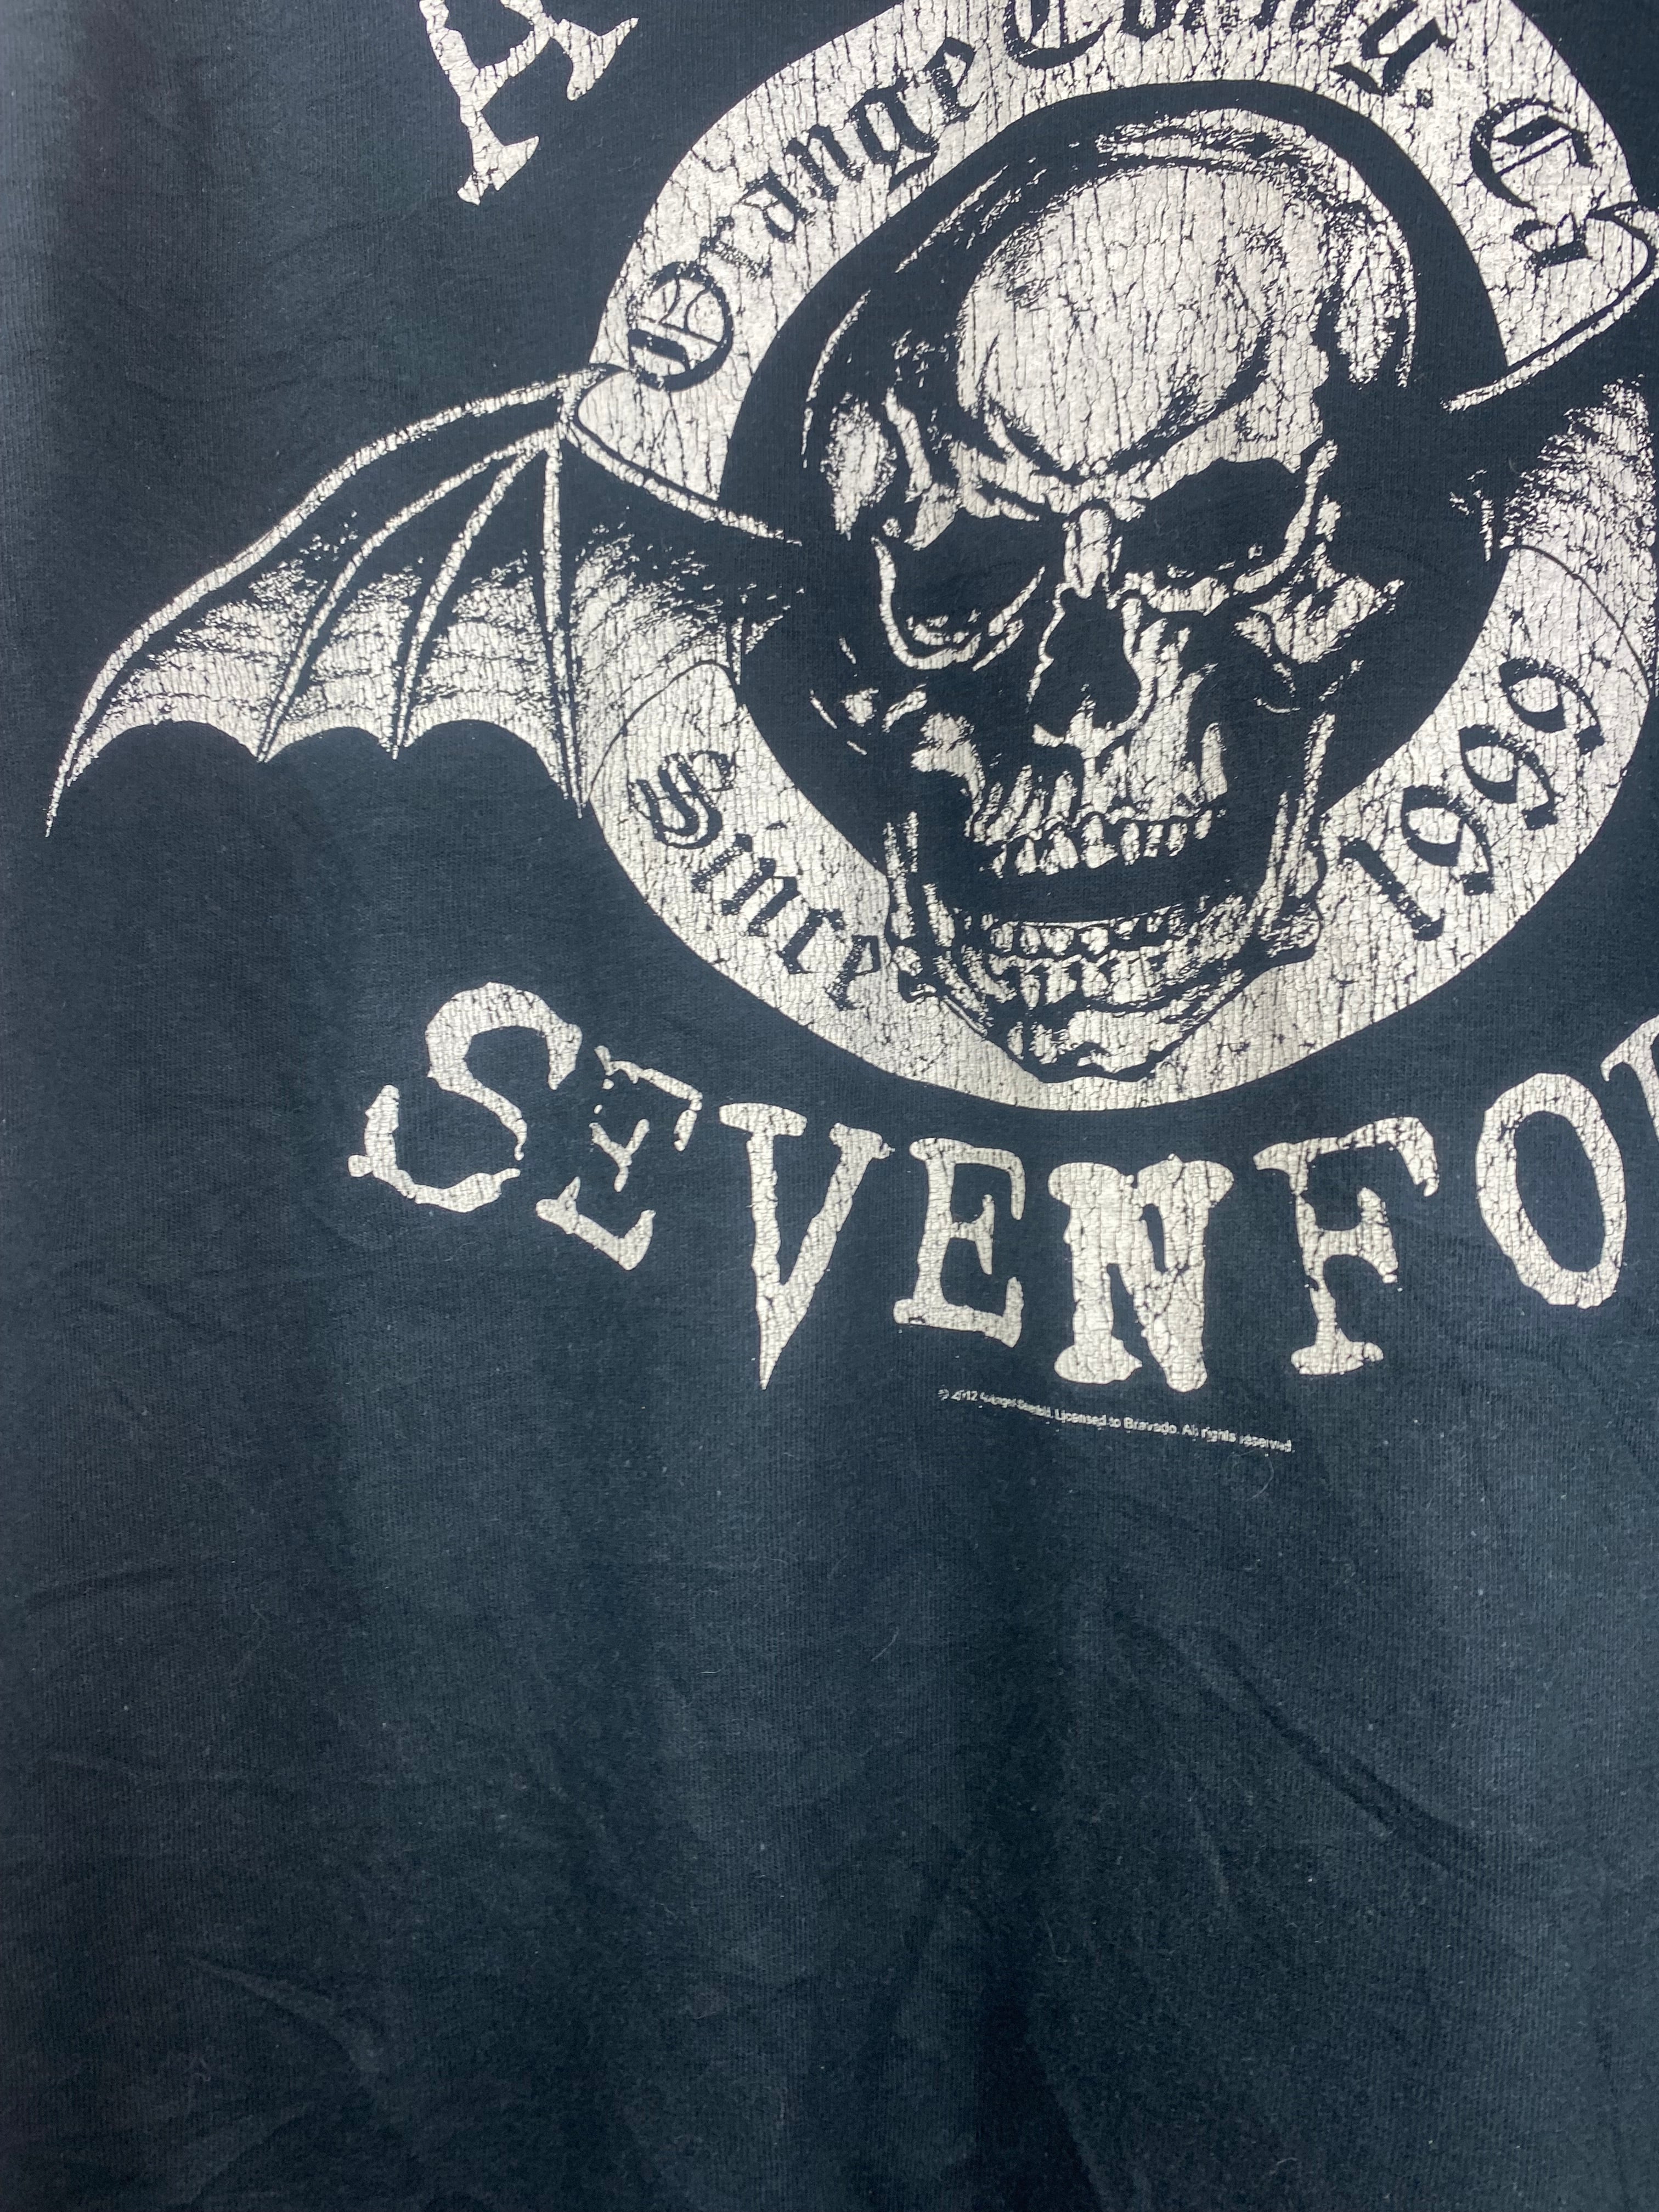 Vintage Avenged Sevenfold 00s t-shirt - size L